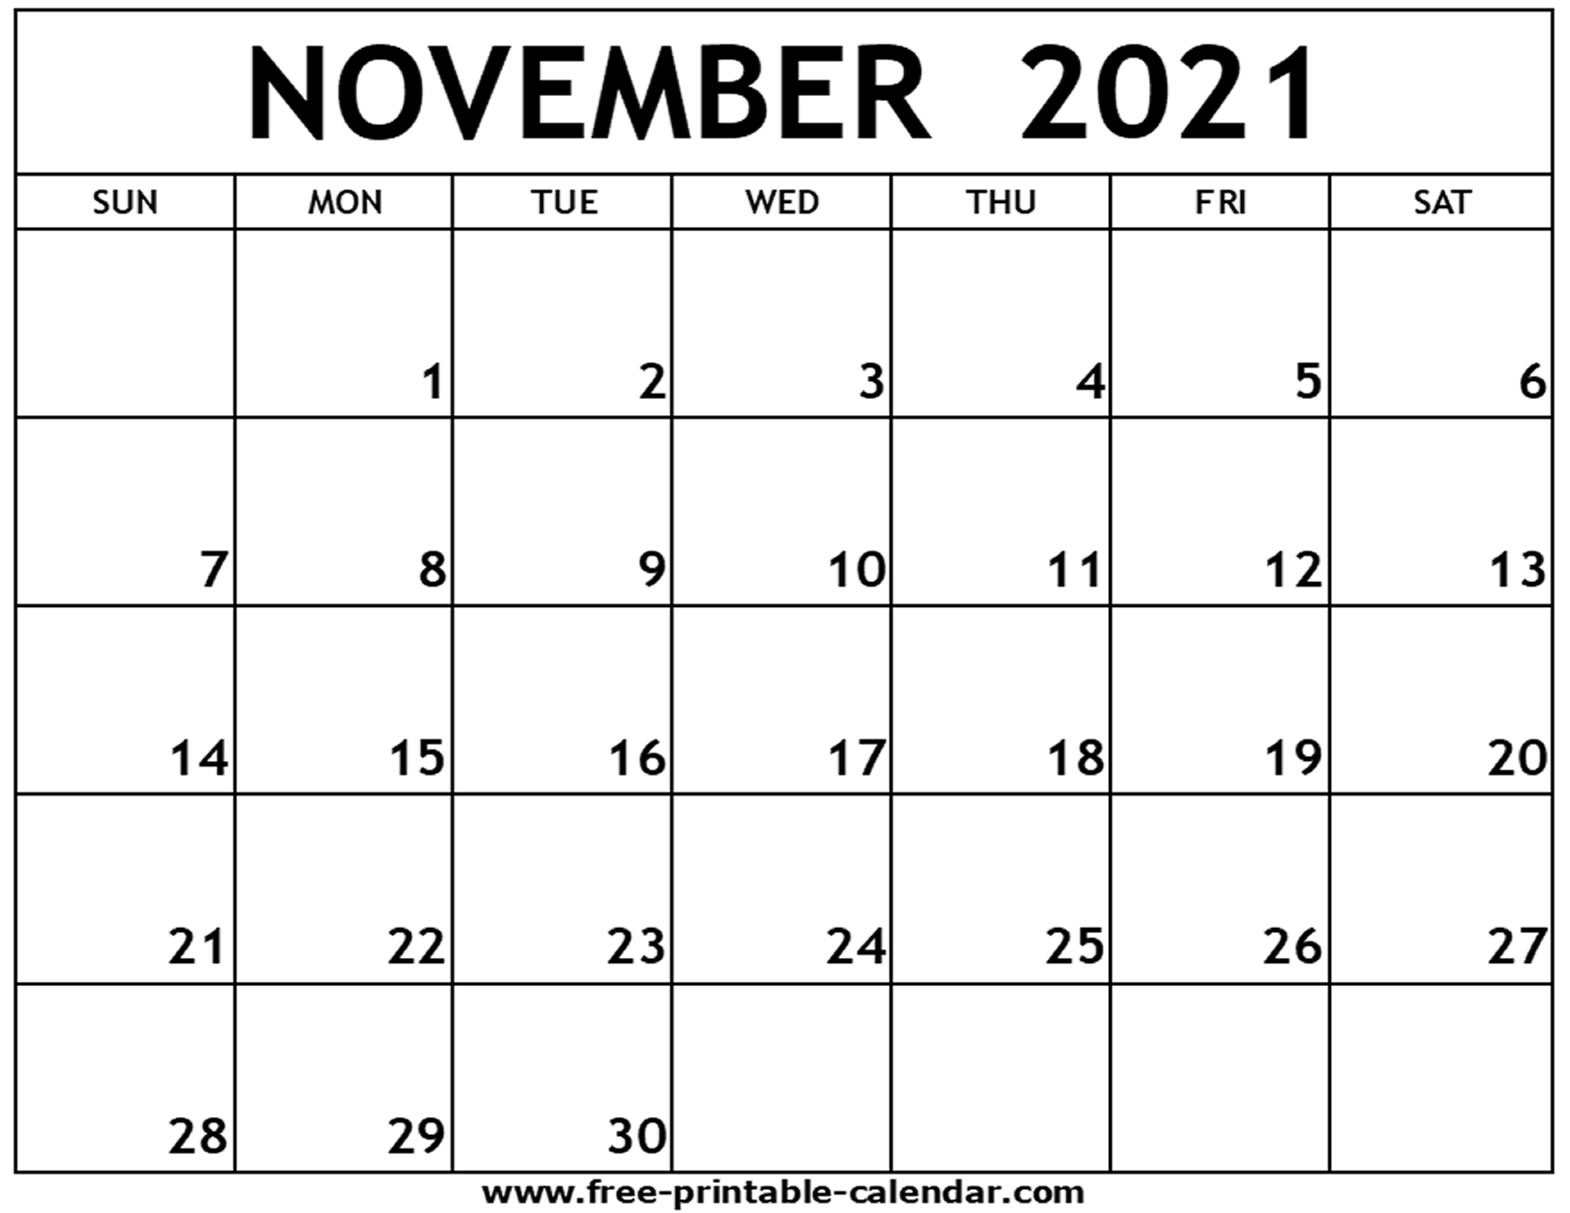 November 2021 Printable Calendar - Free-Printable-Calendar